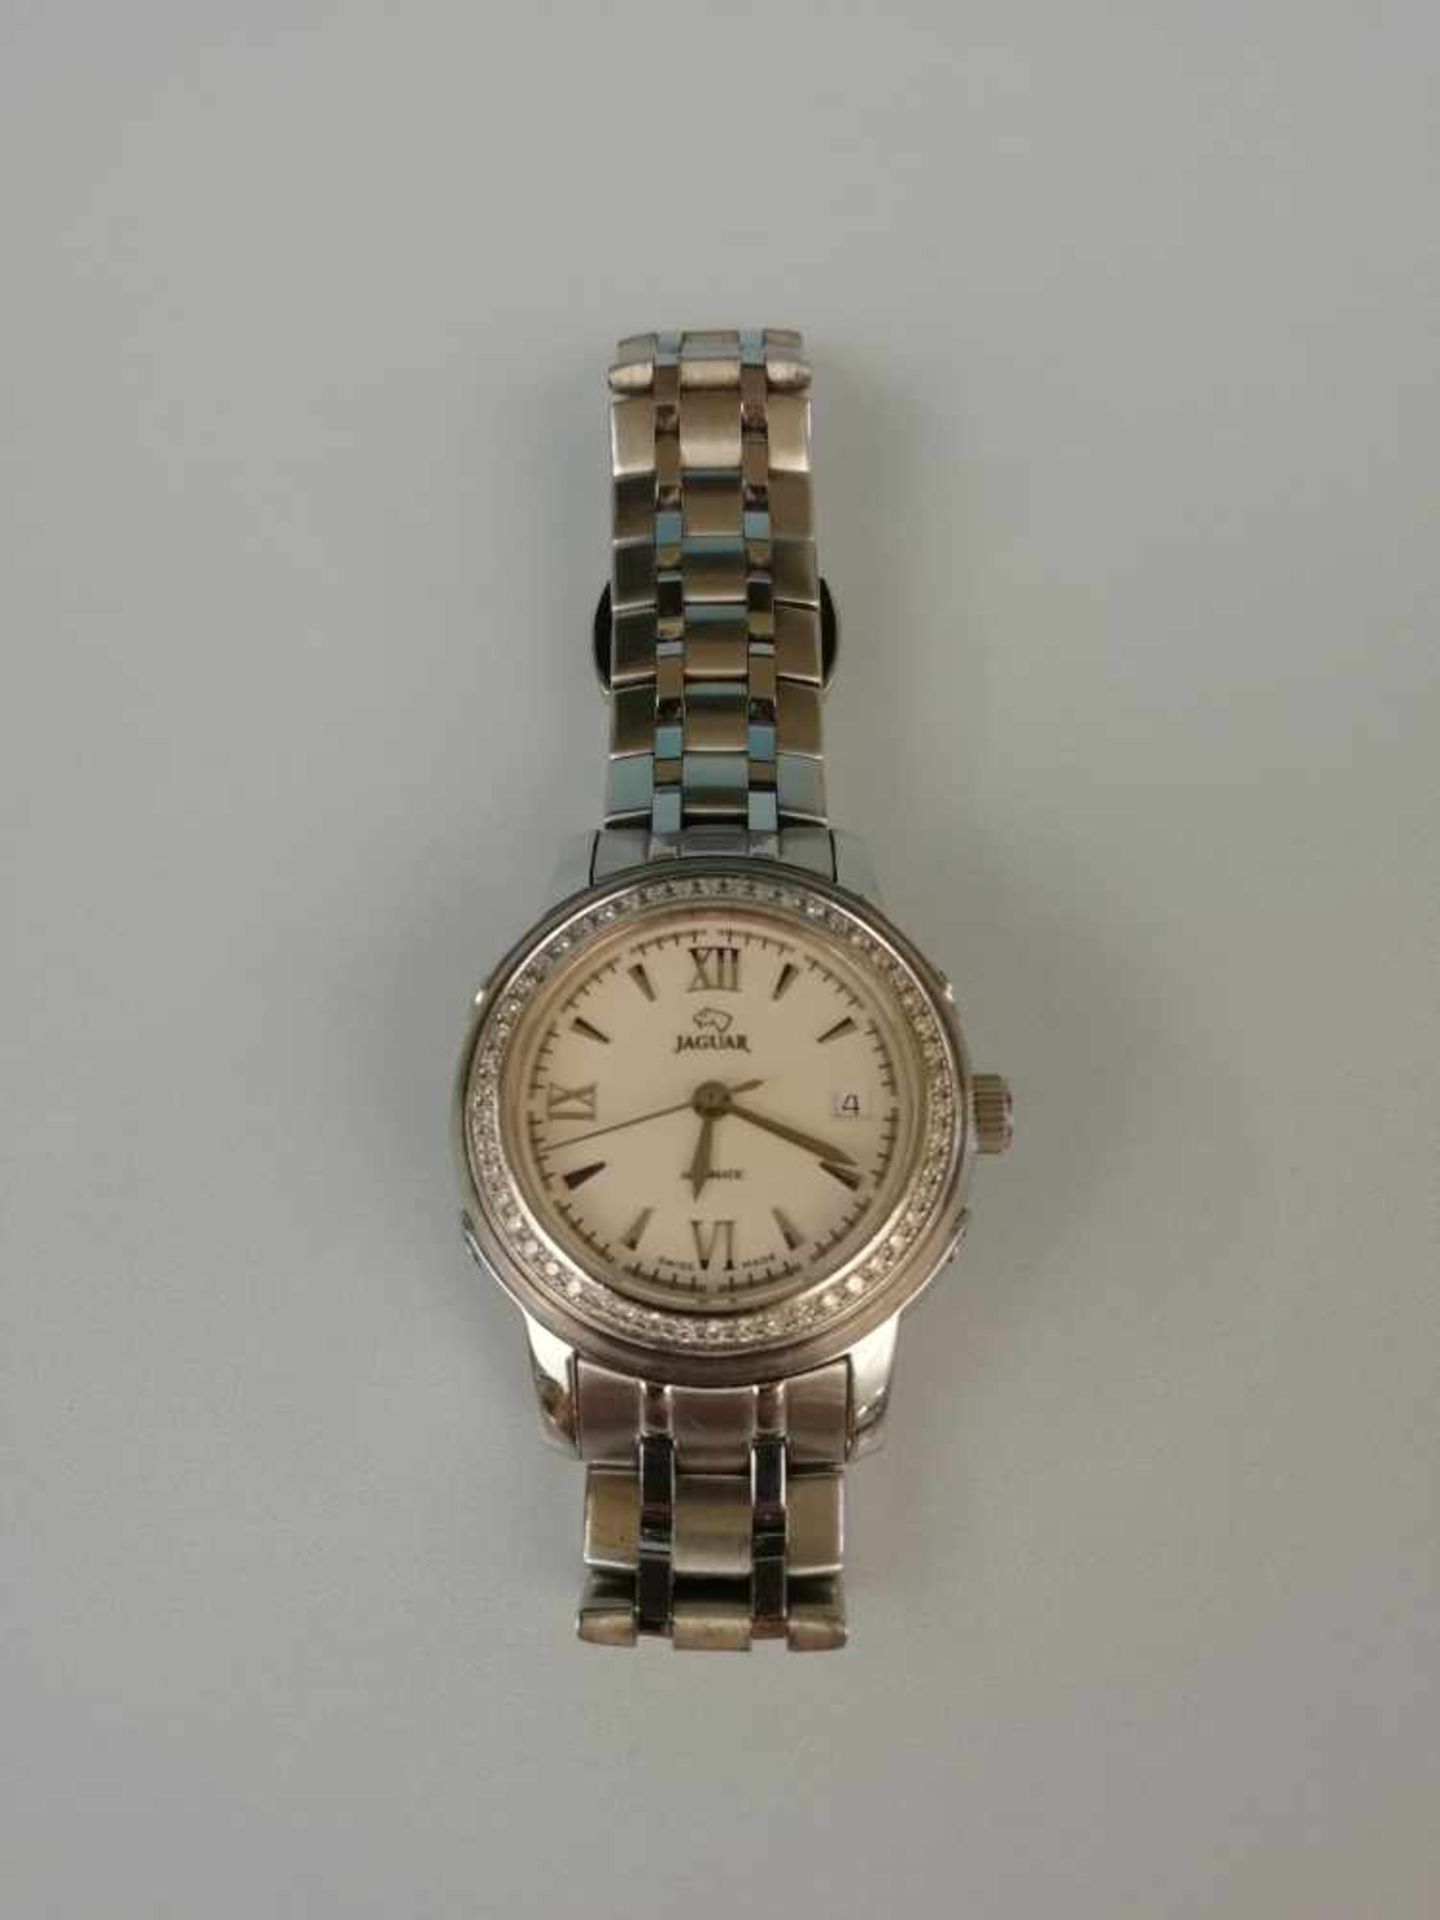 Damen-Armbanduhr "Jaguar"Edelstahl mit Diamanten zus.ca.0,40 ct,, Automatik, Datum, Saphirglas,Länge